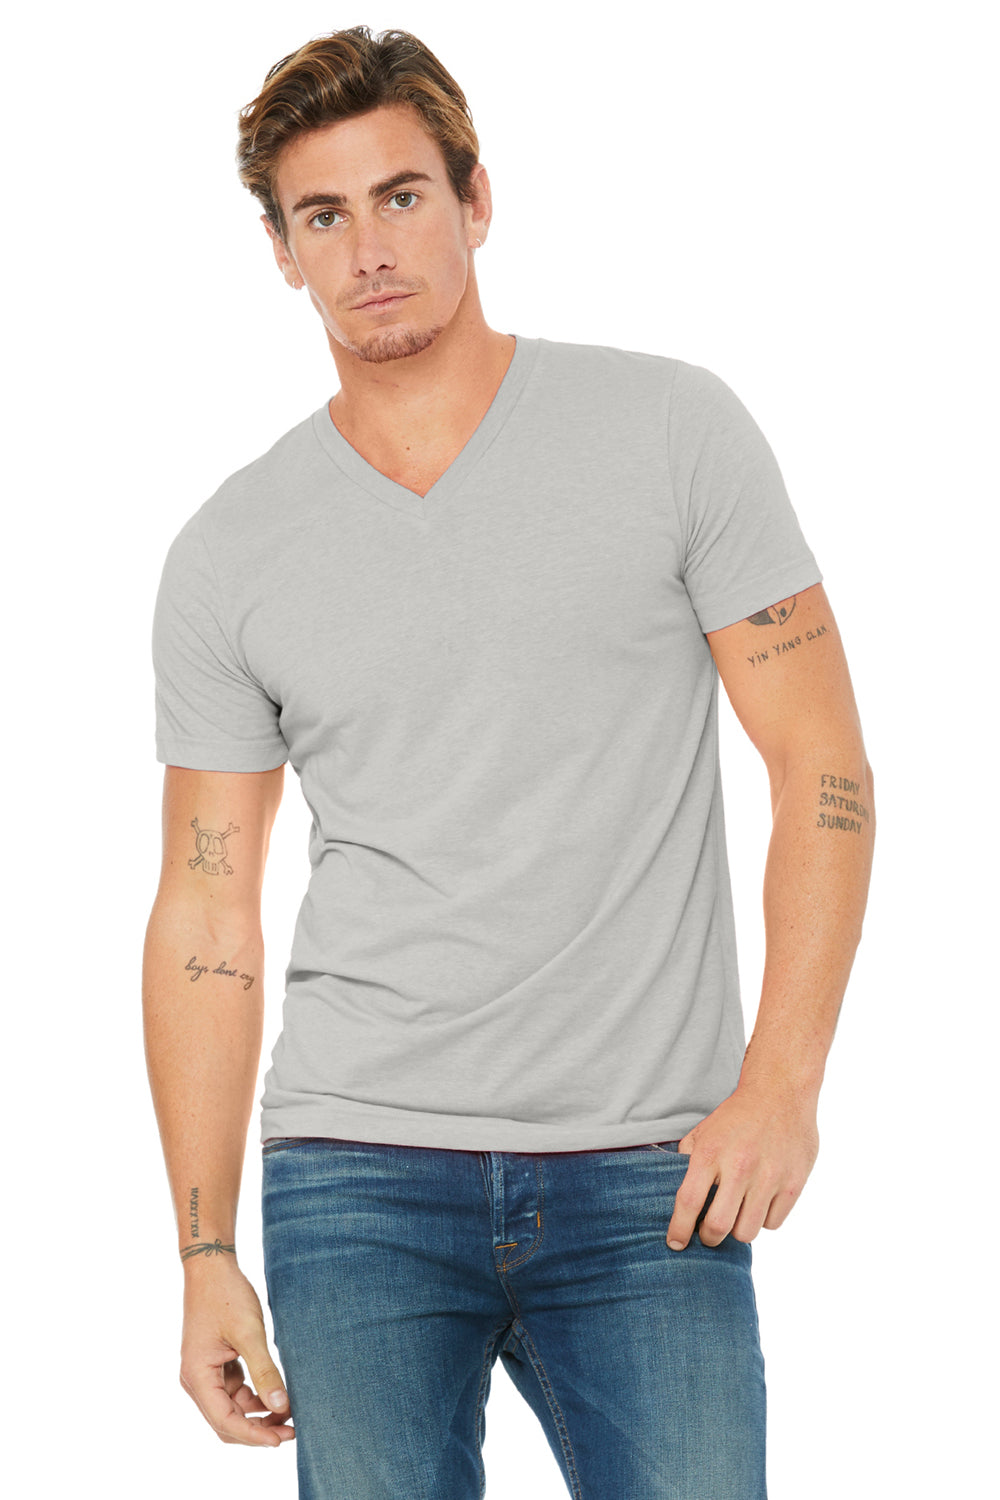 Bella + Canvas 3005 Mens Jersey Short Sleeve V-Neck T-Shirt Silver Grey Front